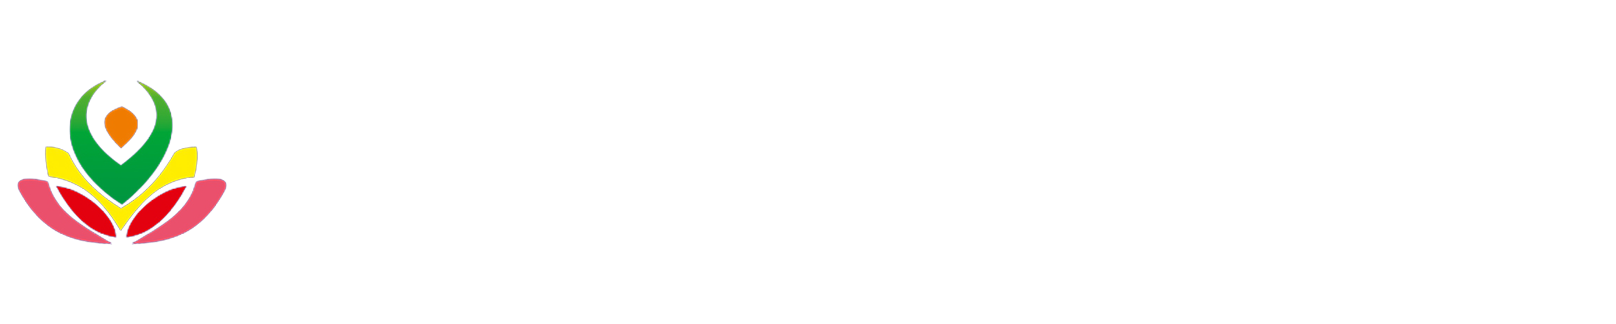 Har Jee Jan Kalyan Trust logo